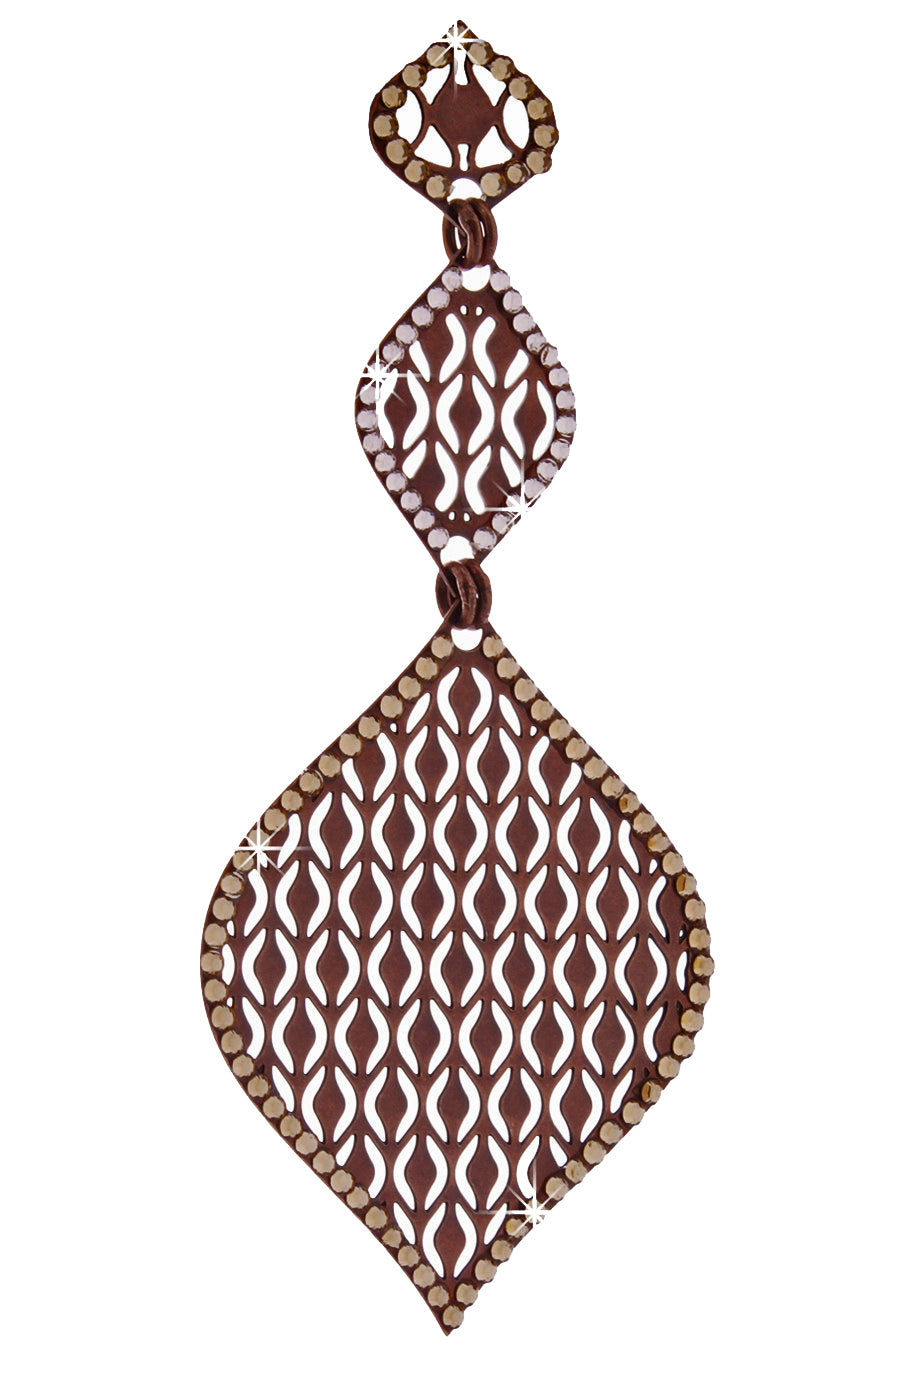 Lidia Μπρονζέ Σκουλαρίκια Με Κρύσταλλα - Lk Designs | Κοσμήματα - Σκουλαρίκια | Lidia Bronze Crystal Earrings